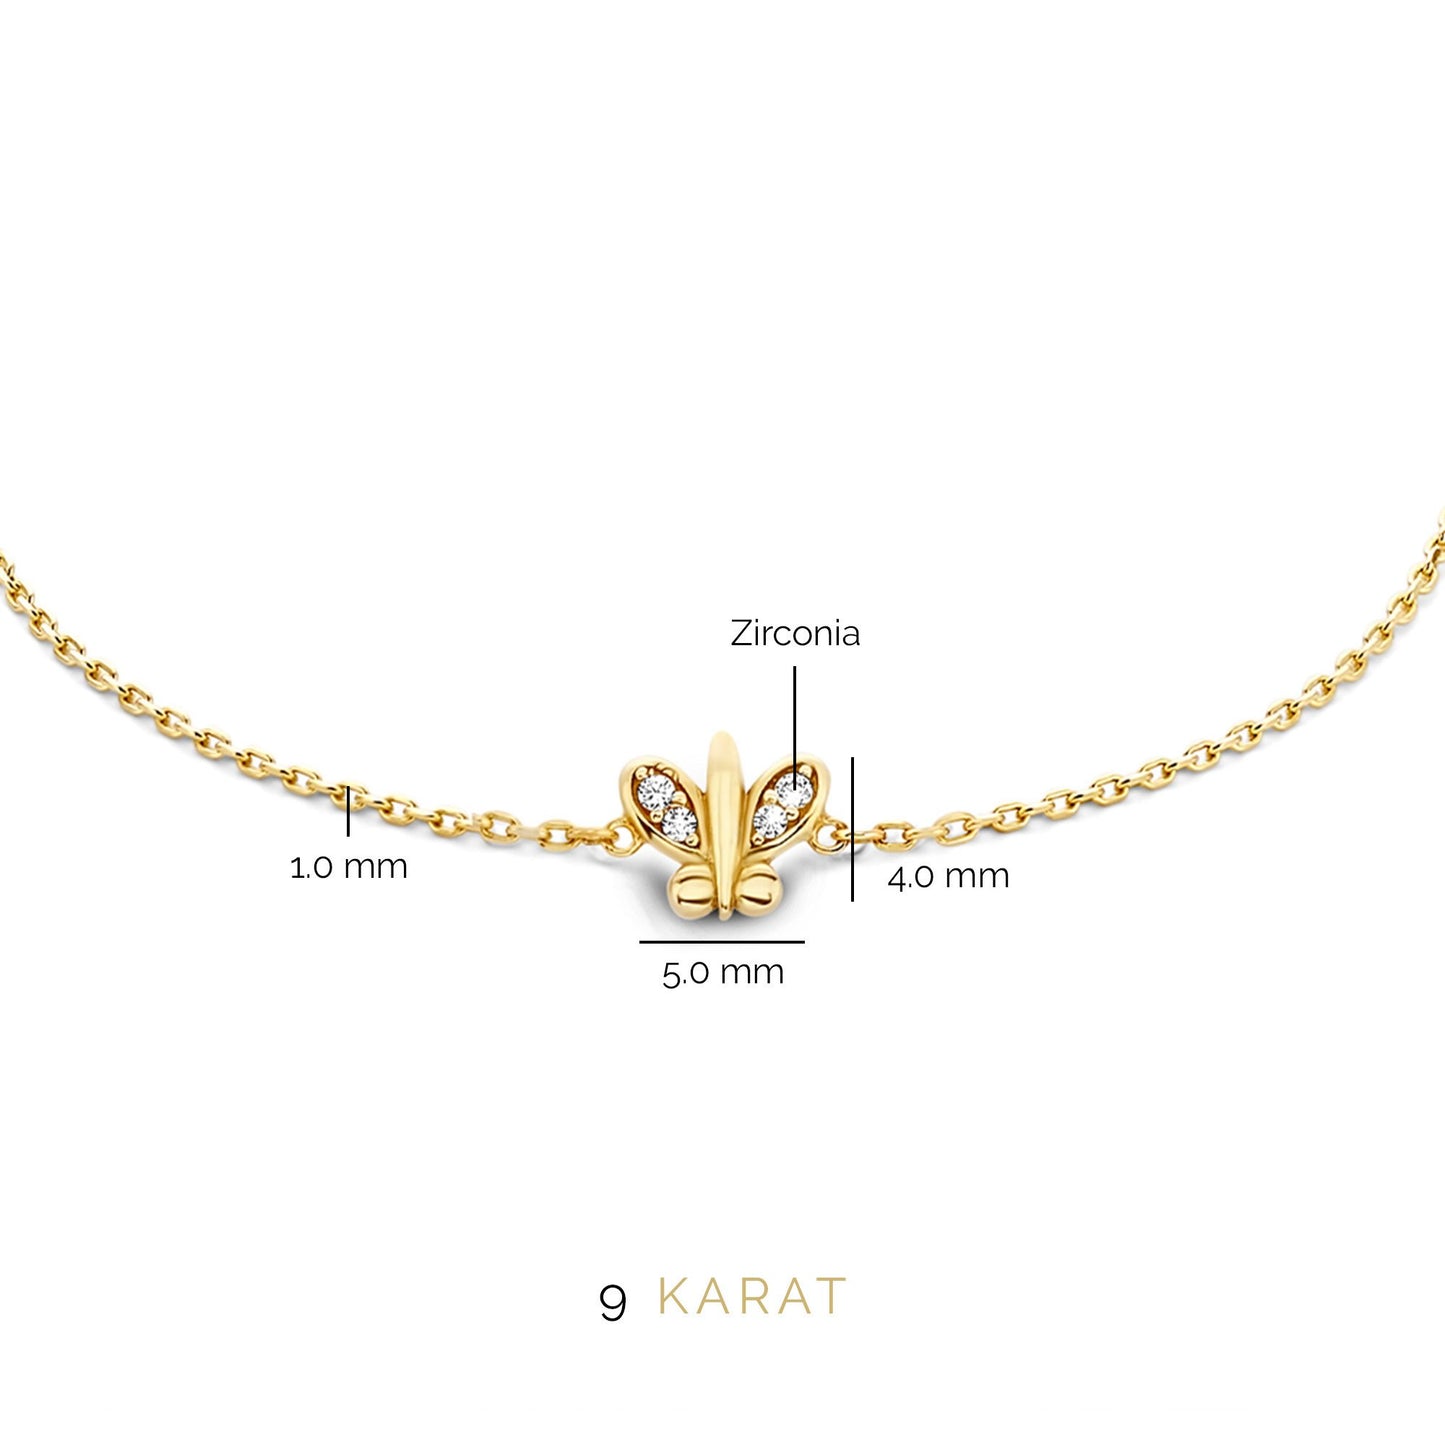 Regalo d'Amore 9 karat gold necklace and bracelet gift set with zirconia stones